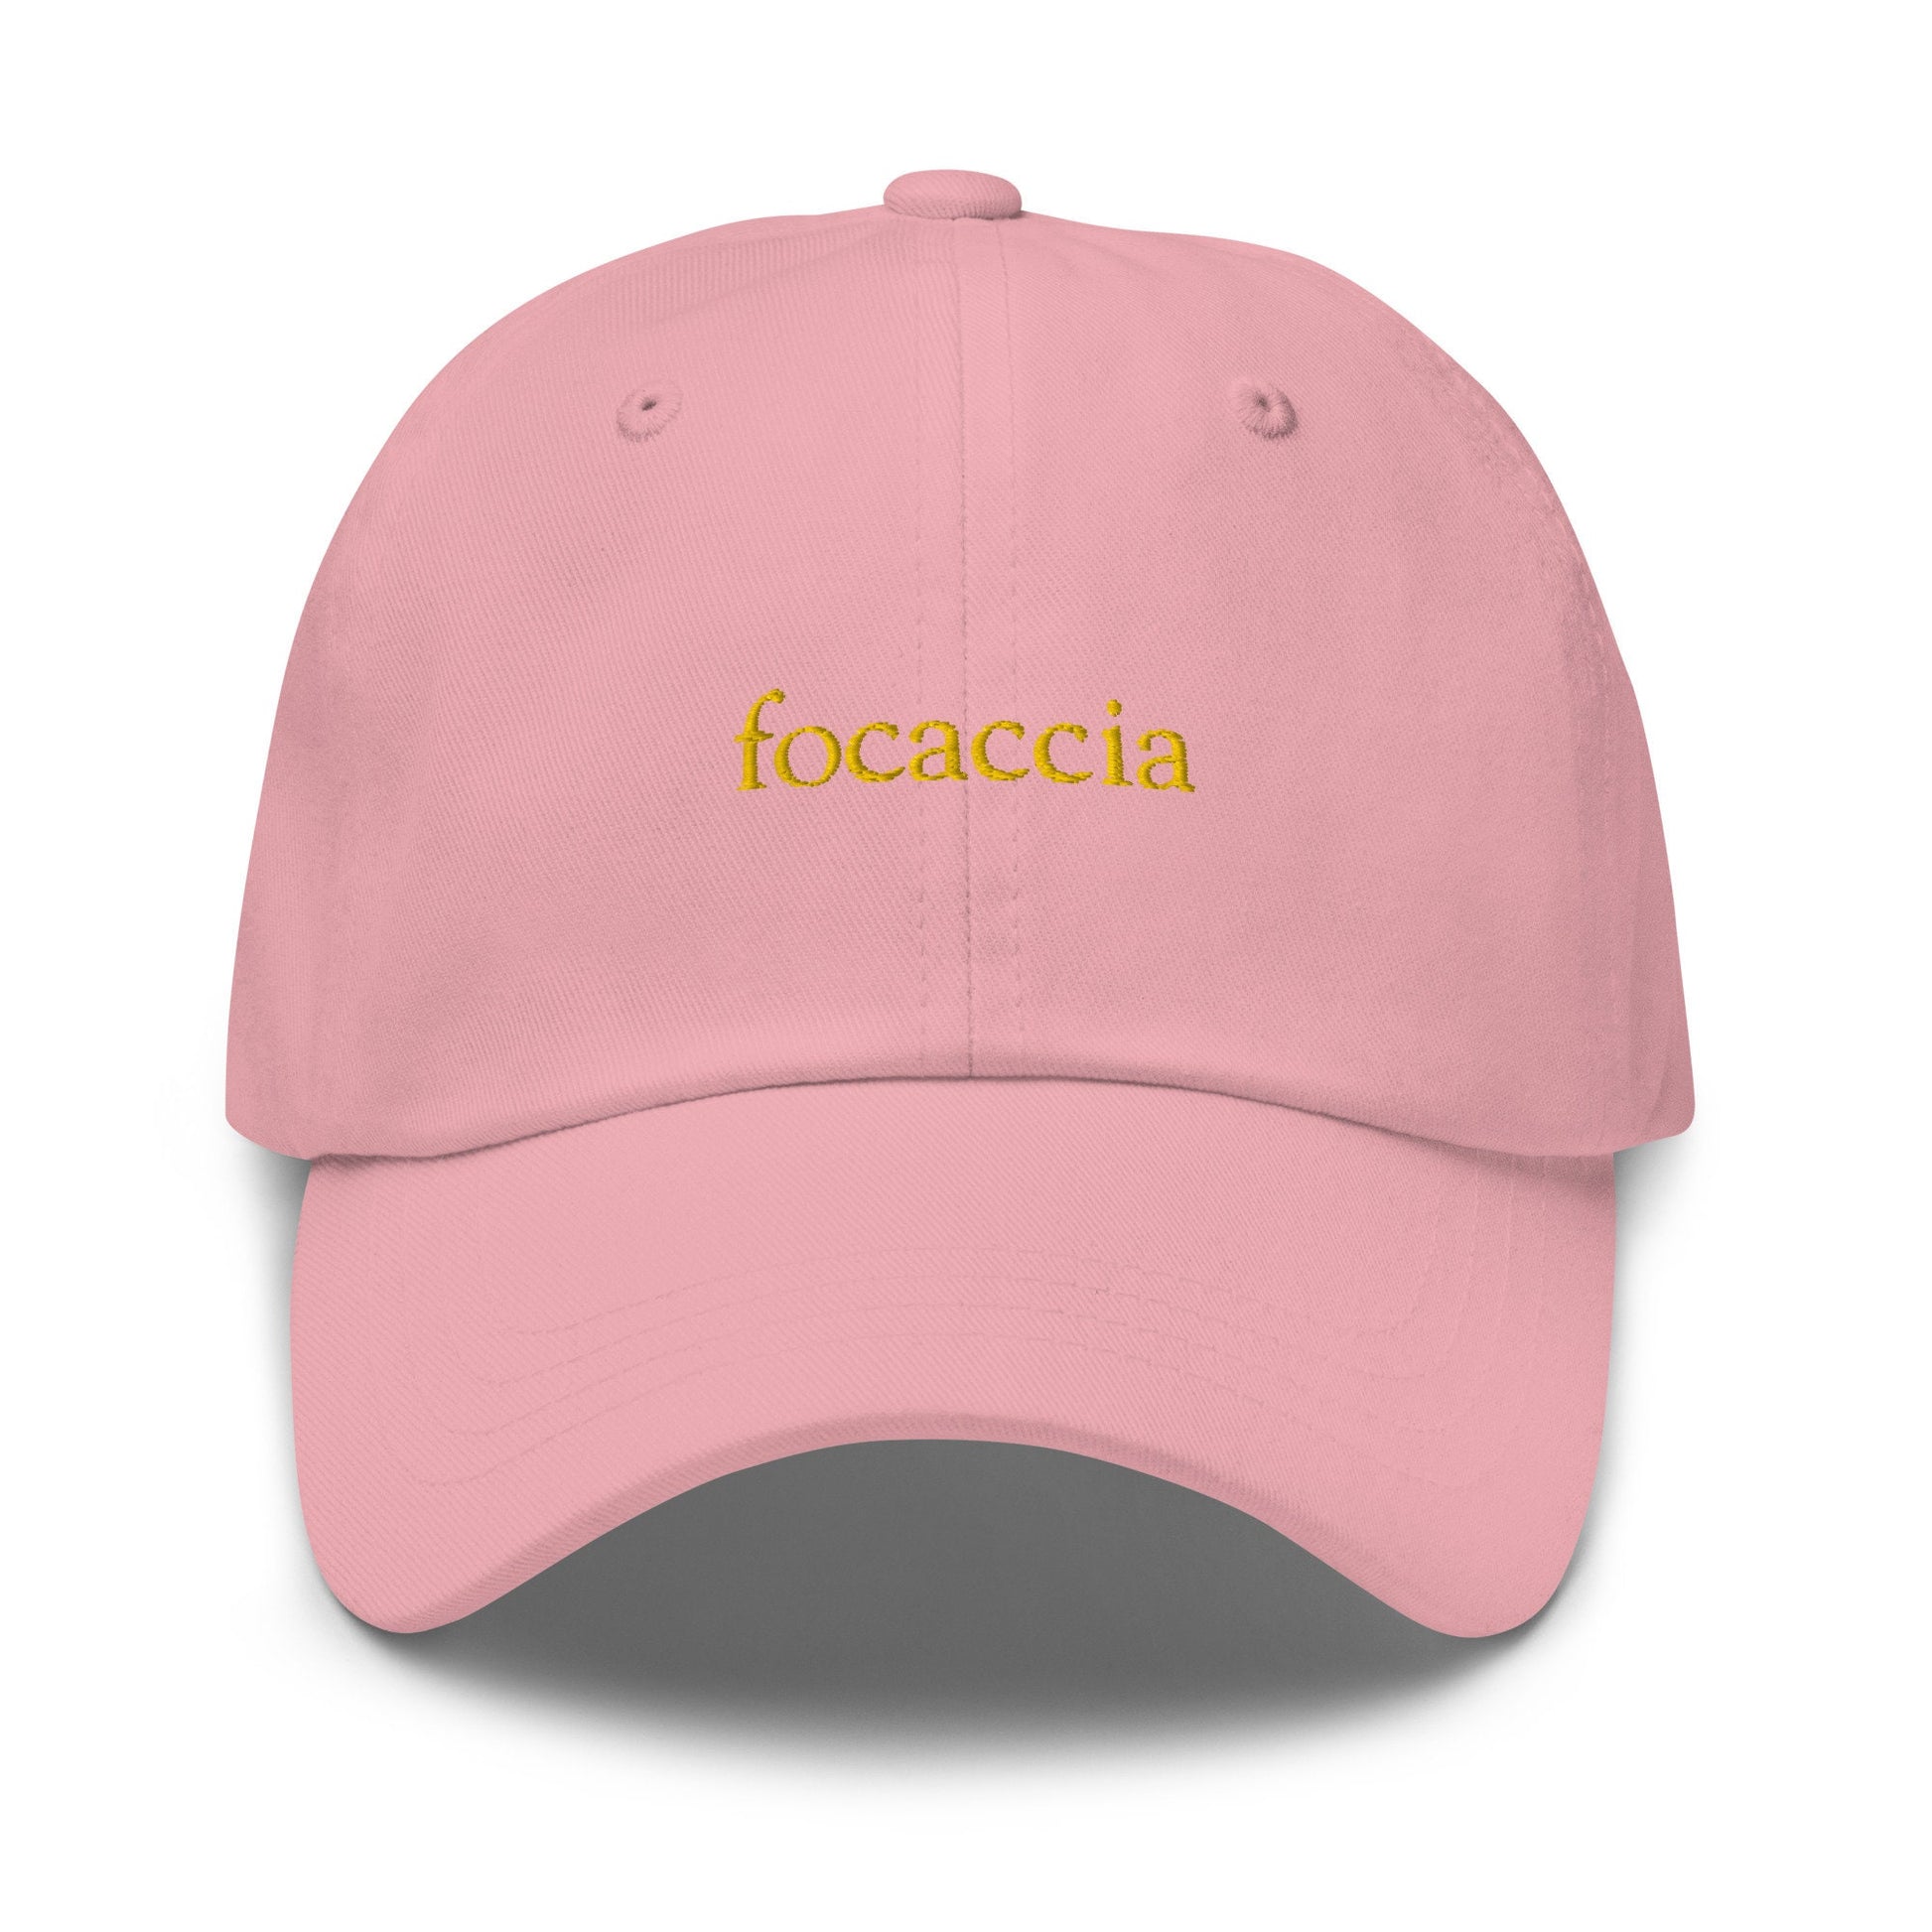 Focaccia Hat - Italian Bread Lovers - Minimalist Embroidered Staff Cotton Hat